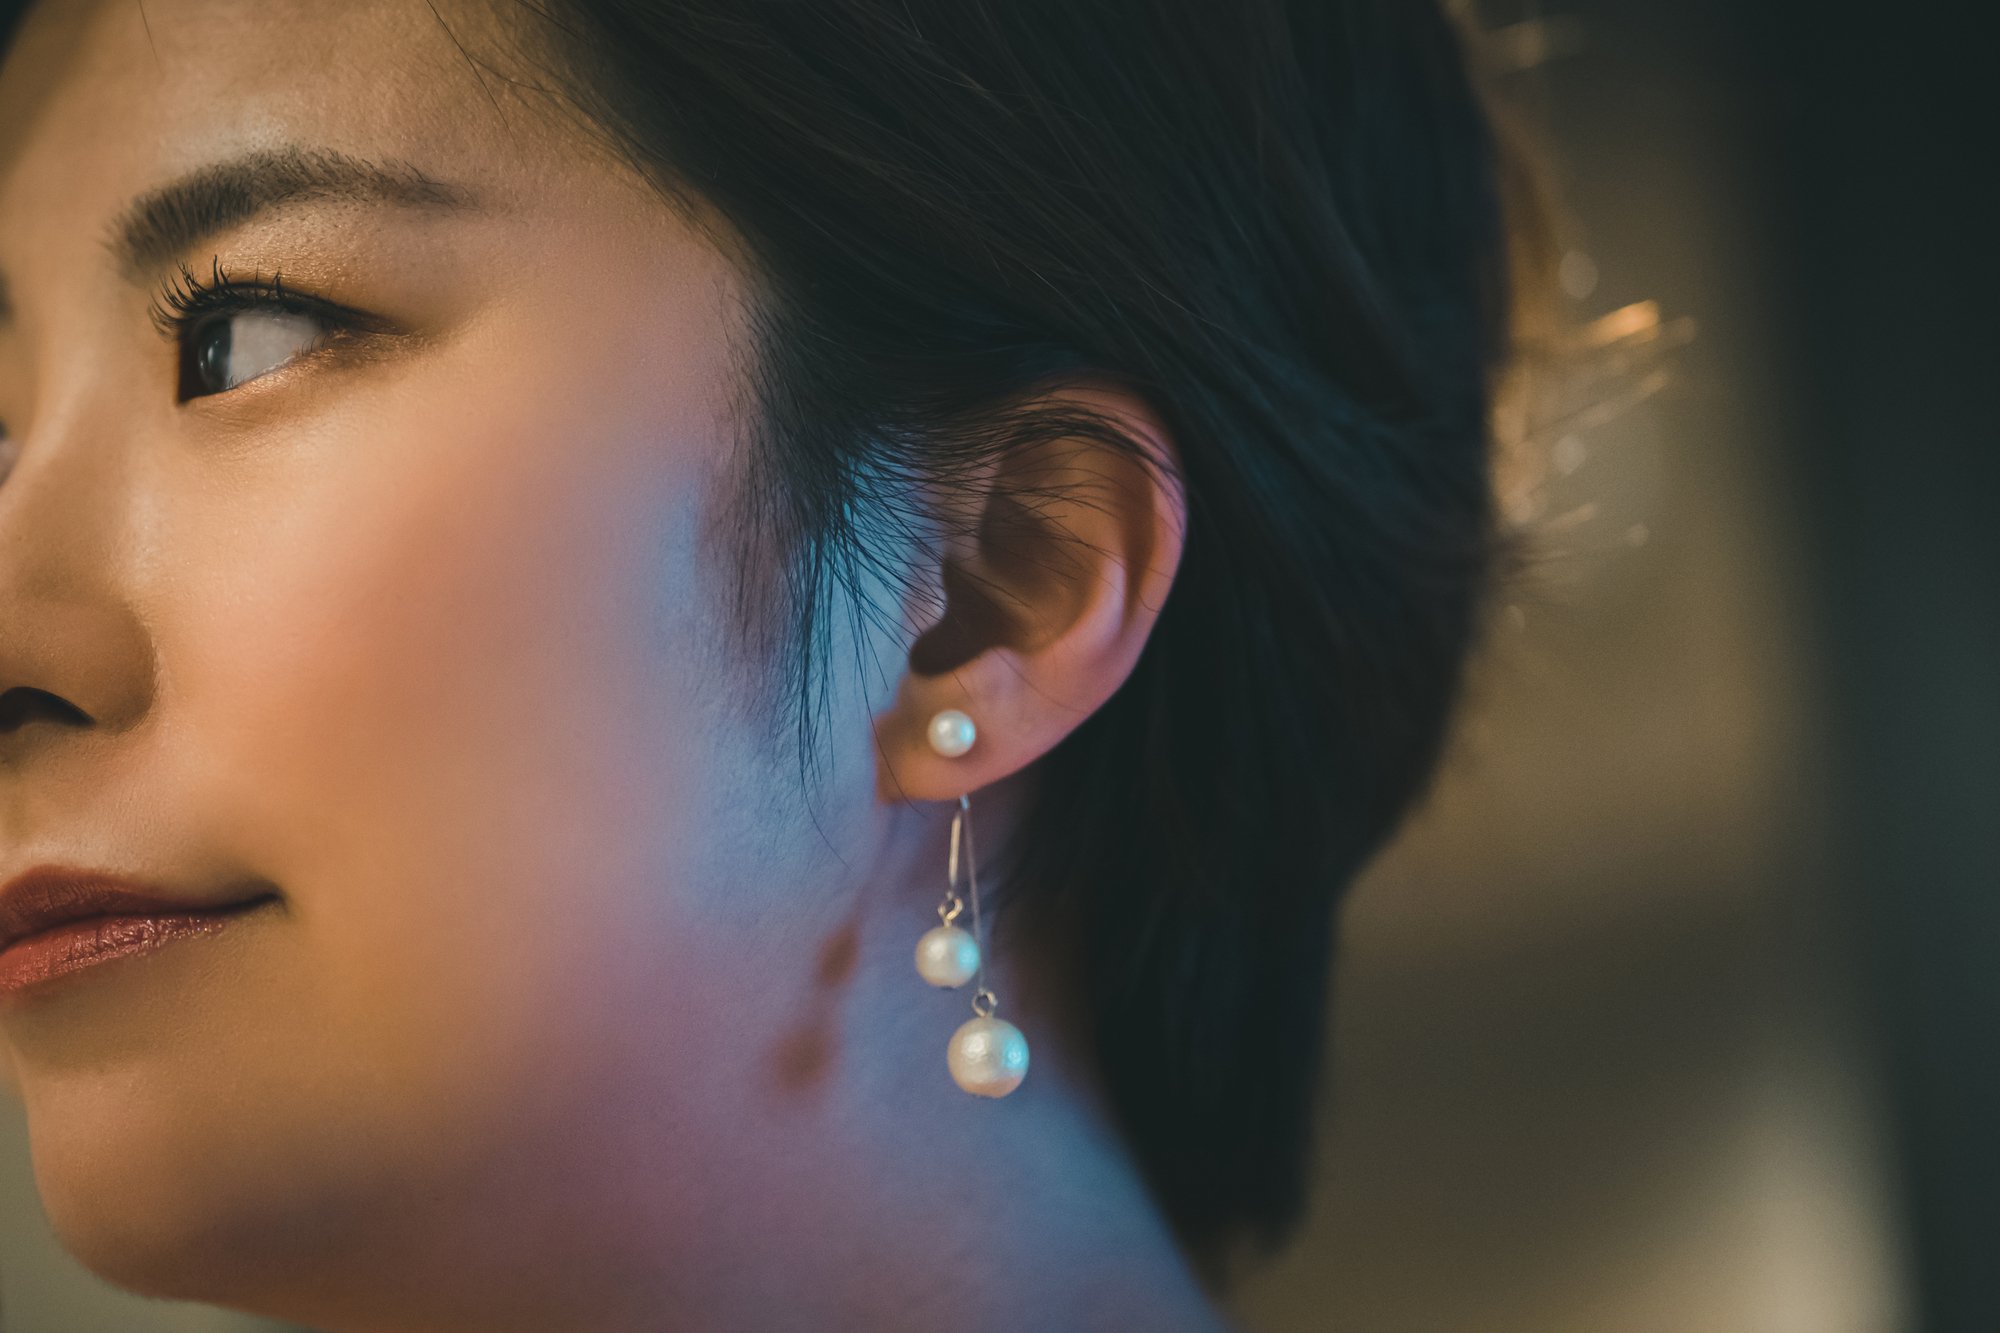 beauty and jewelery concept - woman wearing shiny diamond earrings